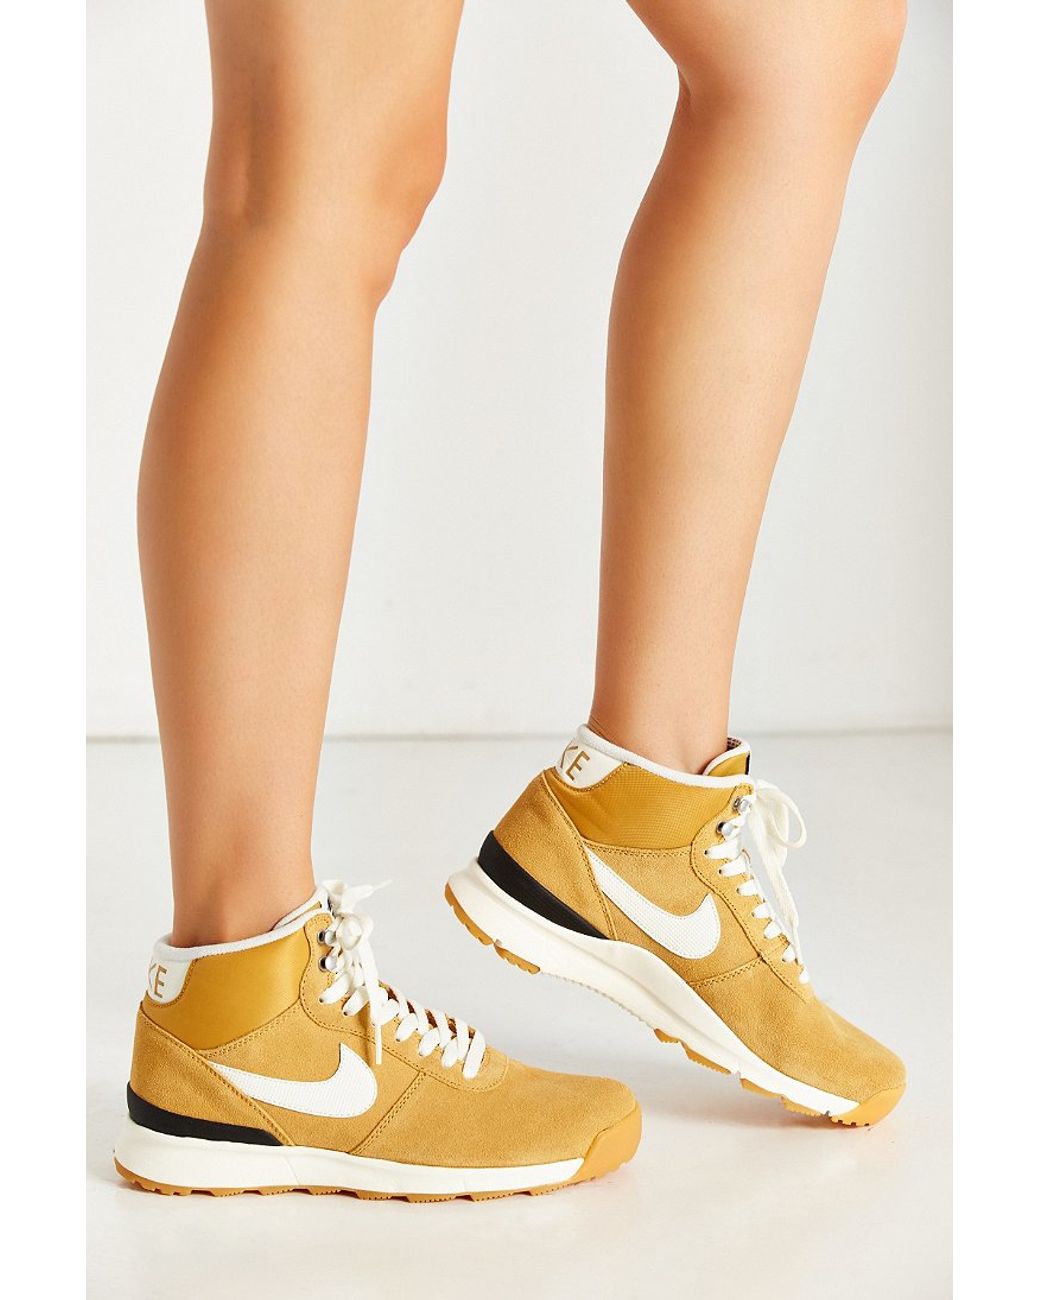 Nike Women's Acorra Suede Sneakerboot in Yellow | Lyst